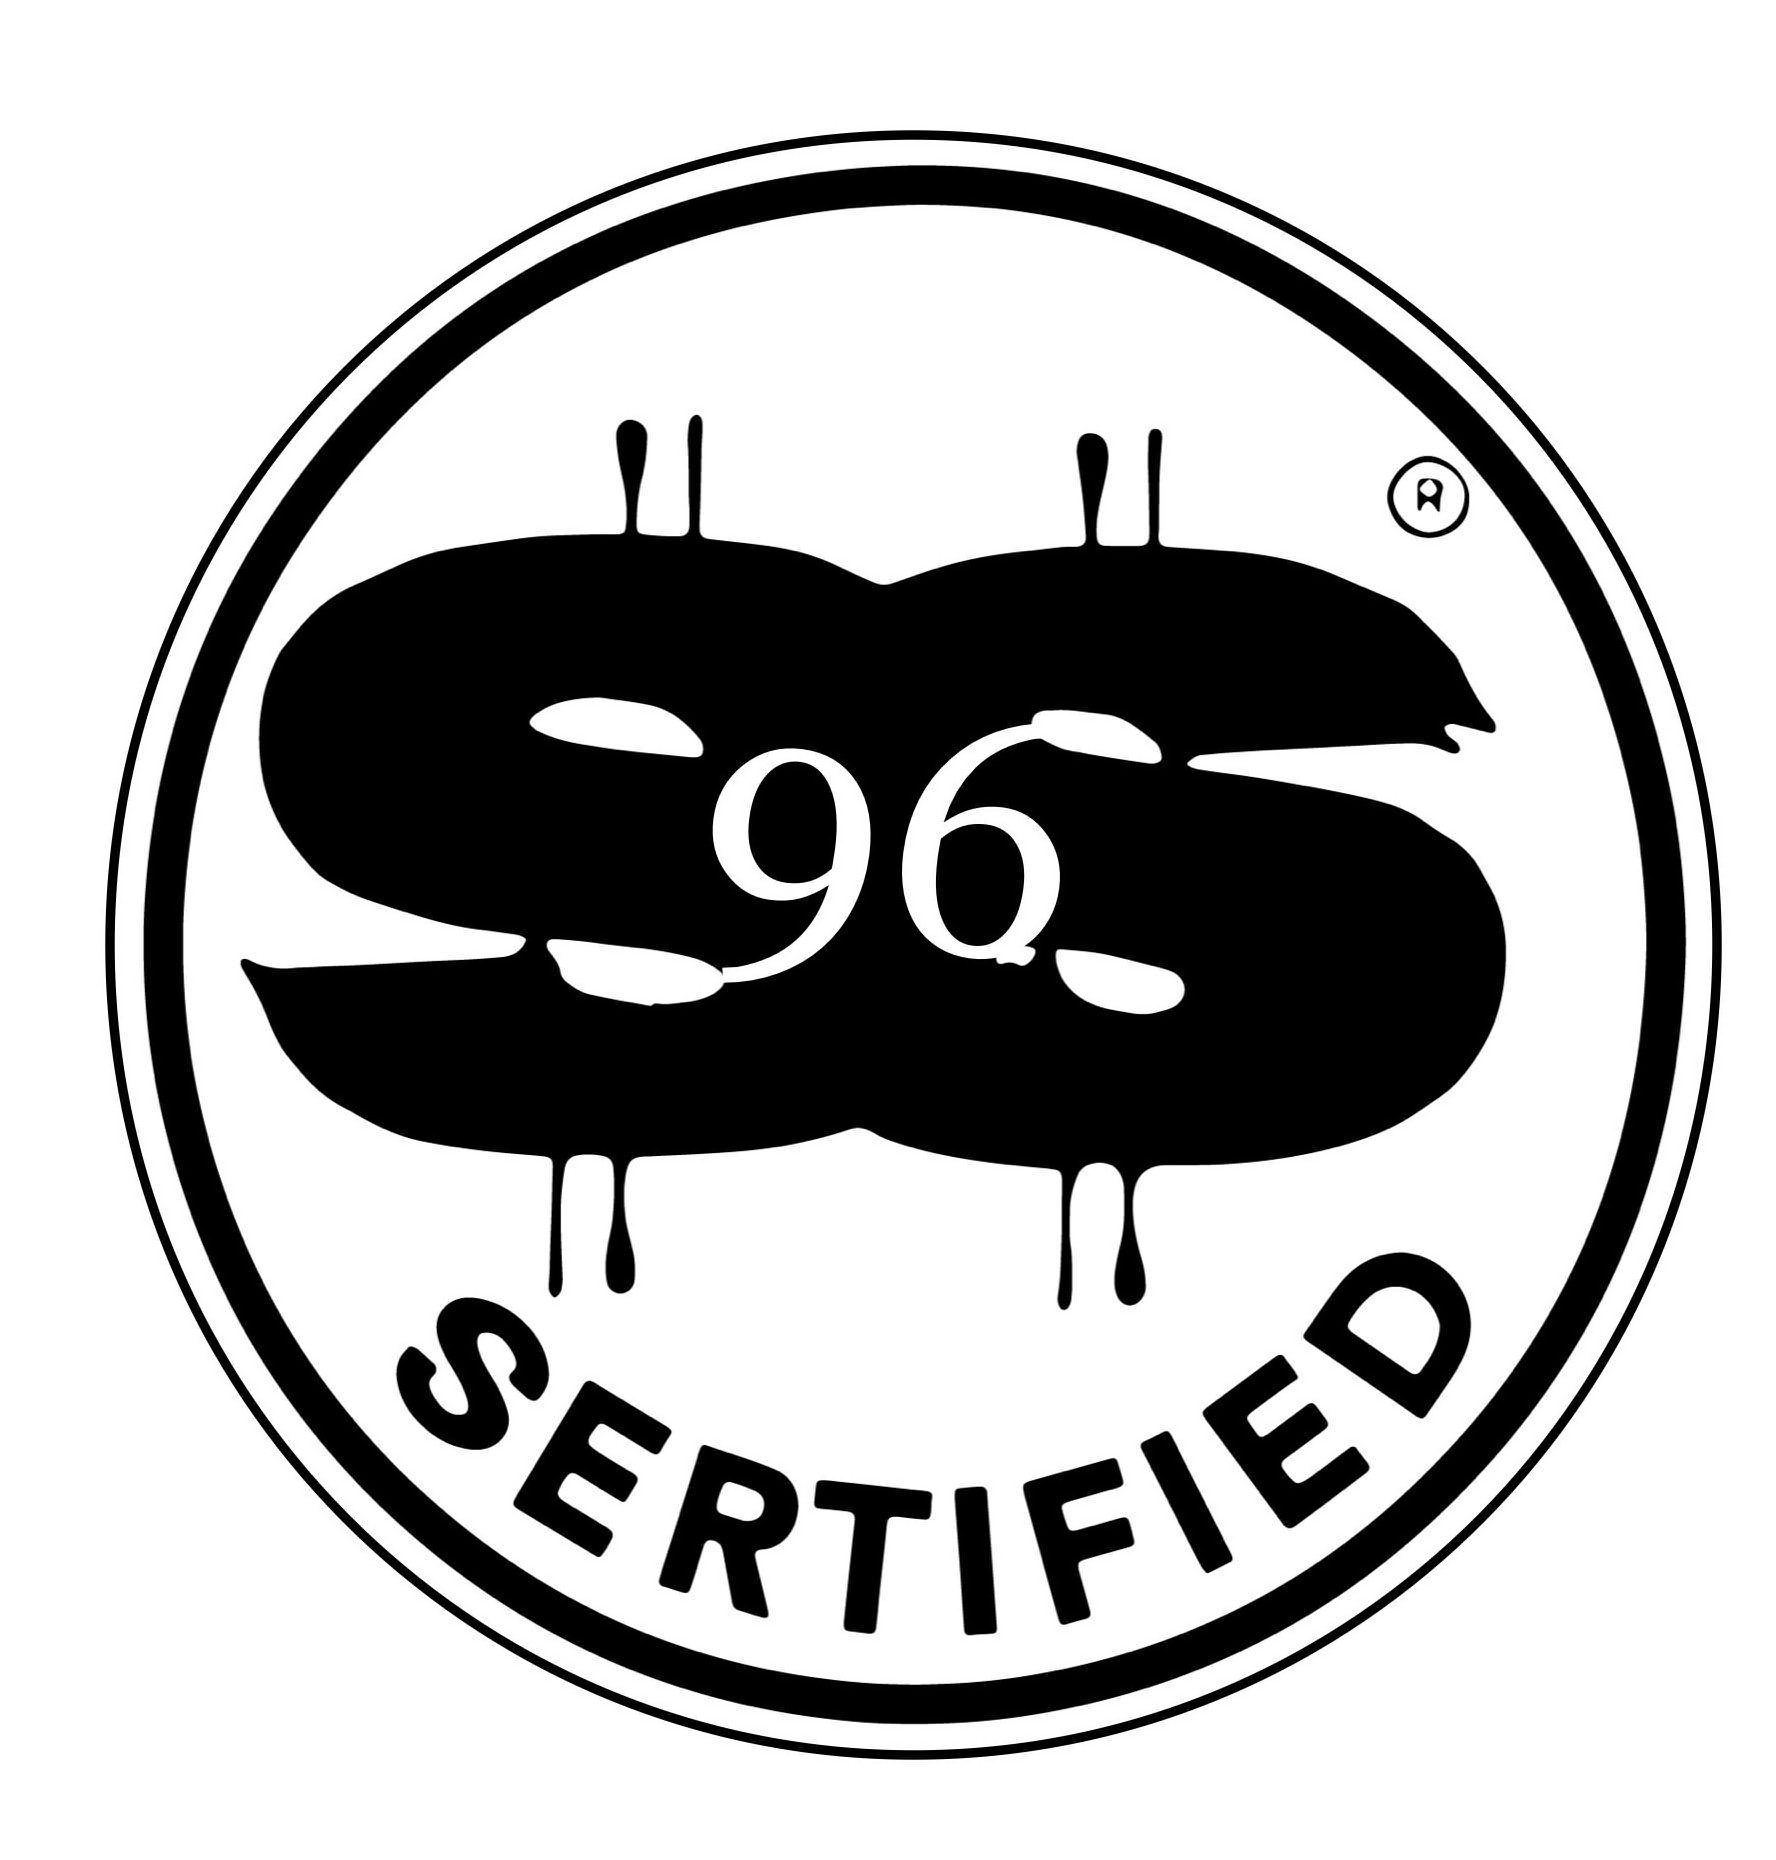  SERTIFIED96